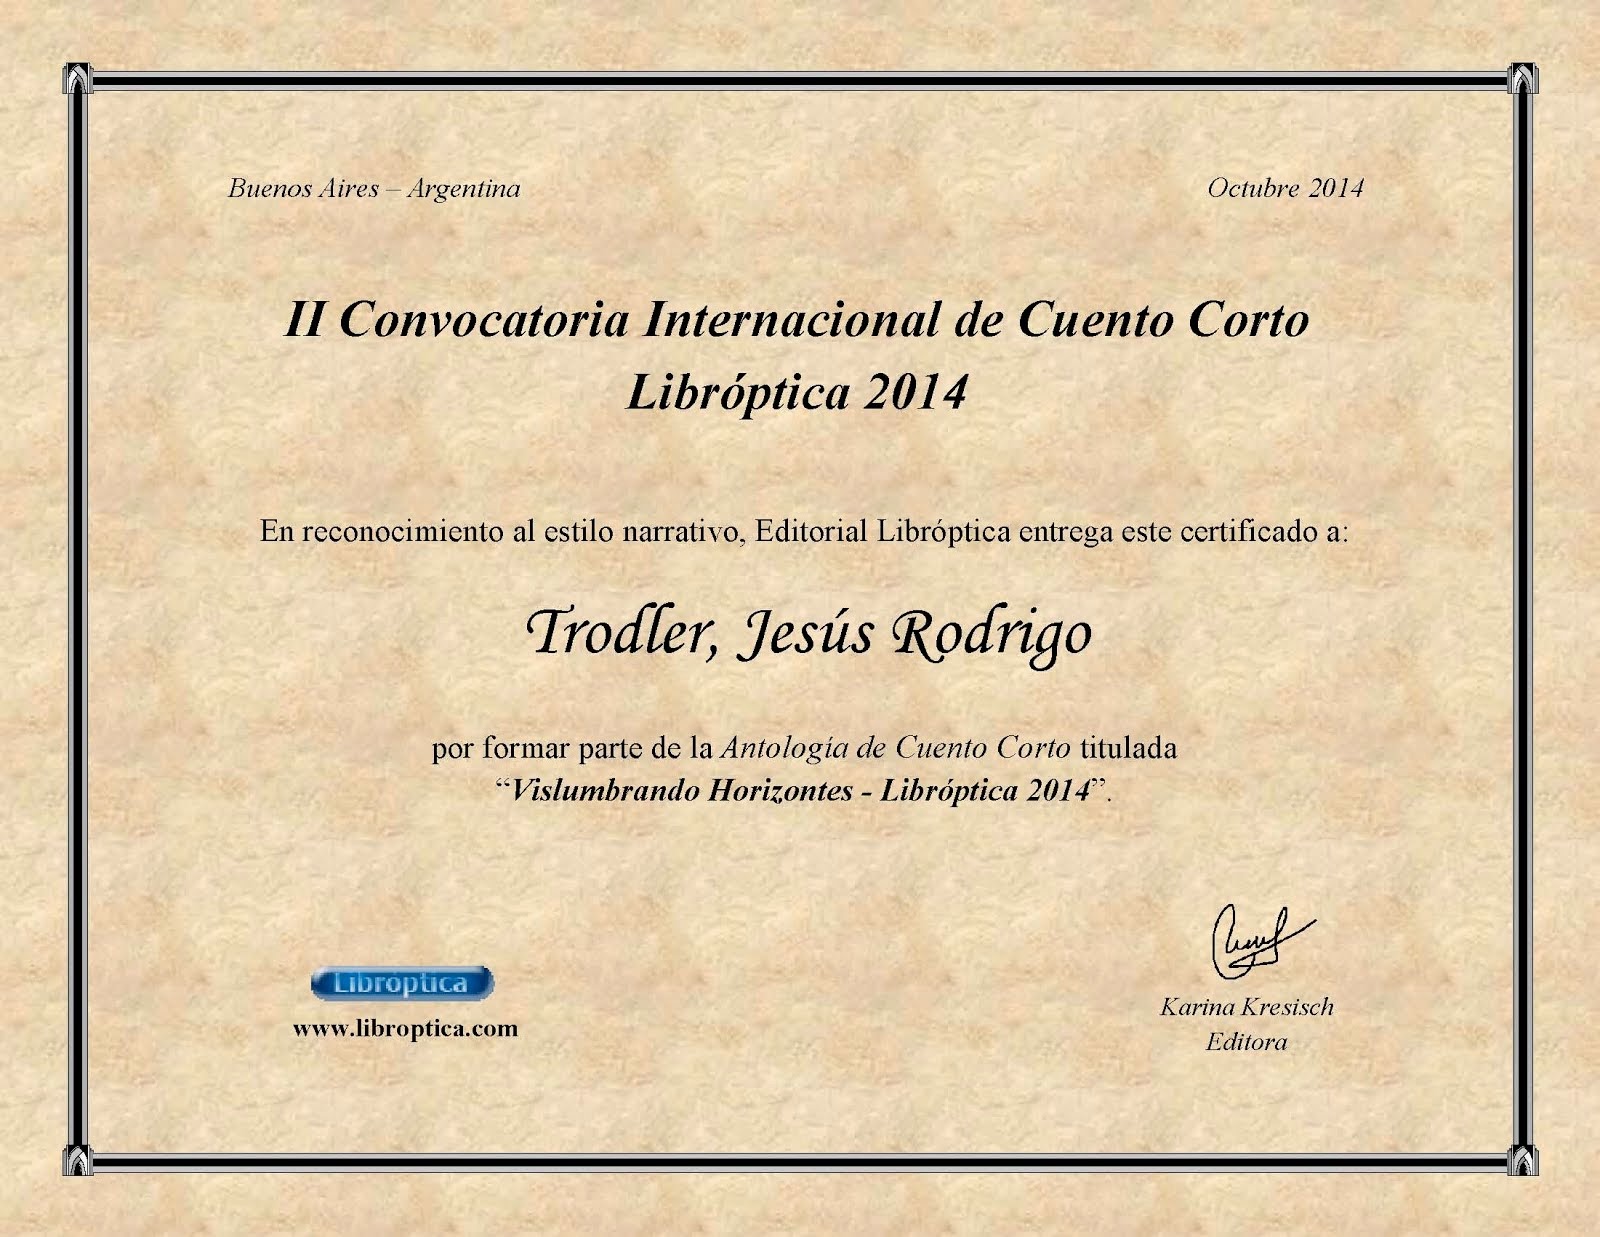 Diploma "II convocatoria internacional de cuento corto Libróptica 2014"